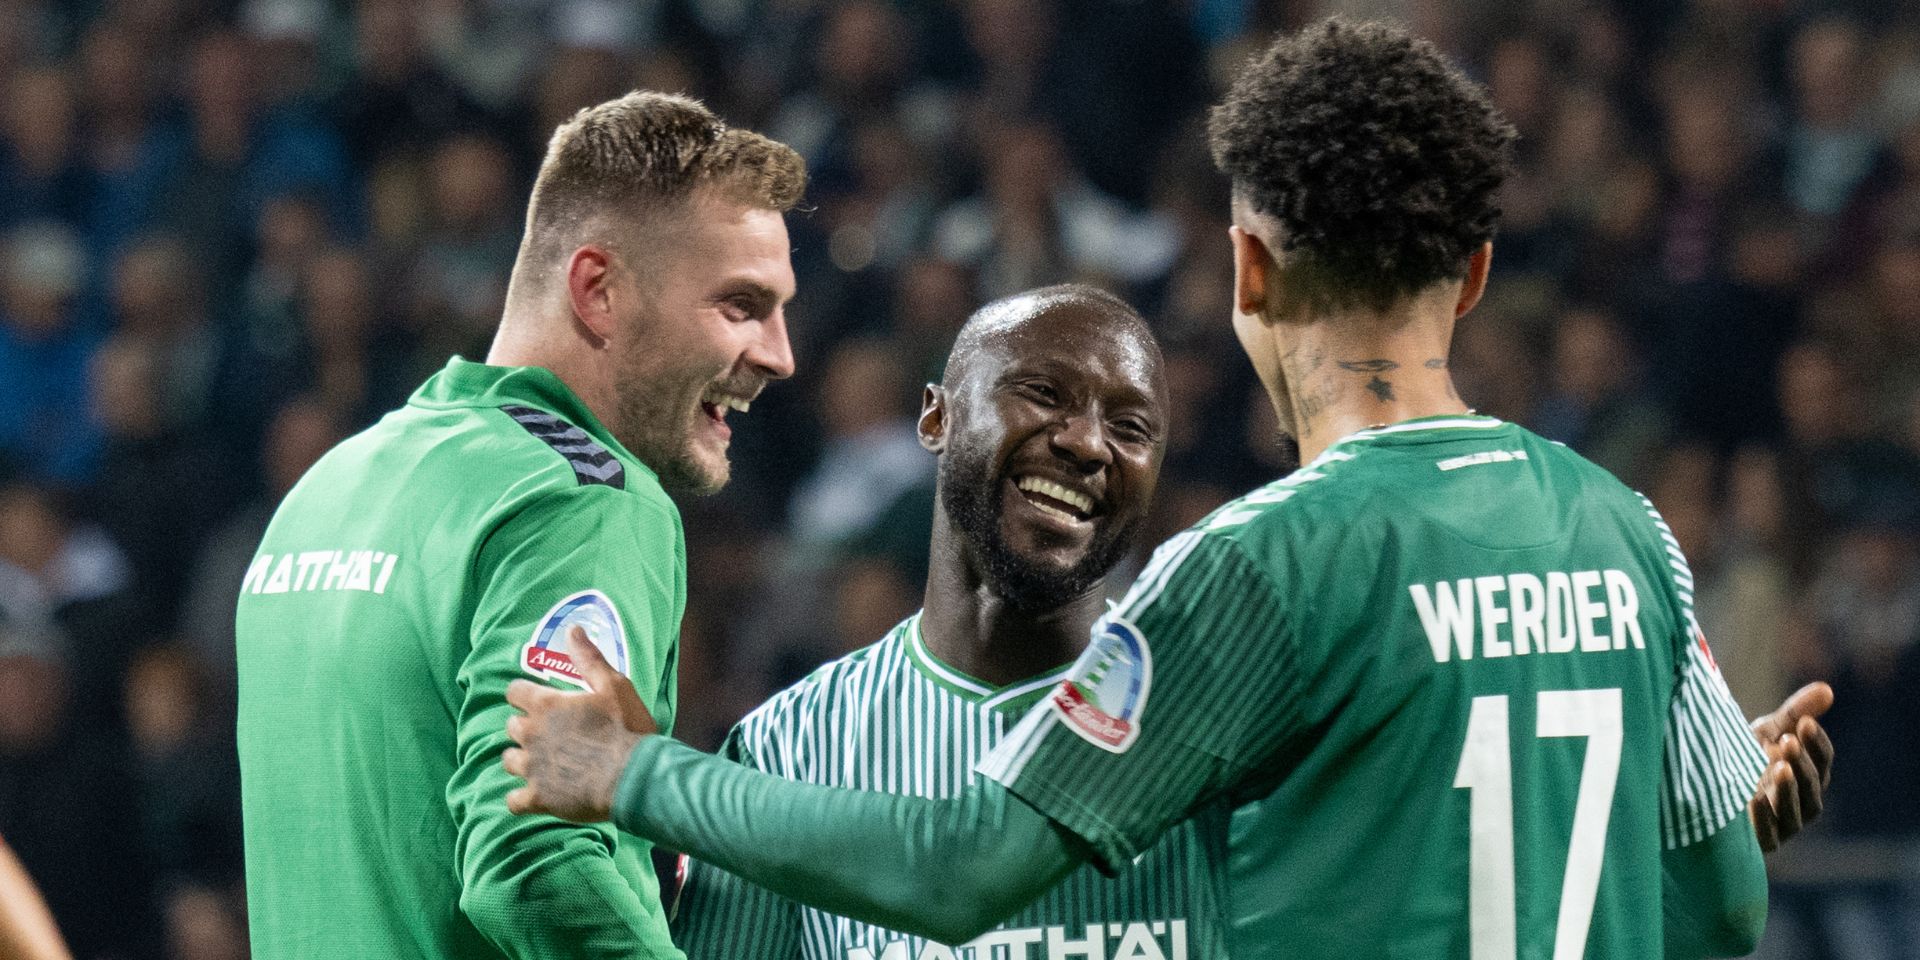 Werder Bremen release damning Naby Keita statement after ‘he let his team down’